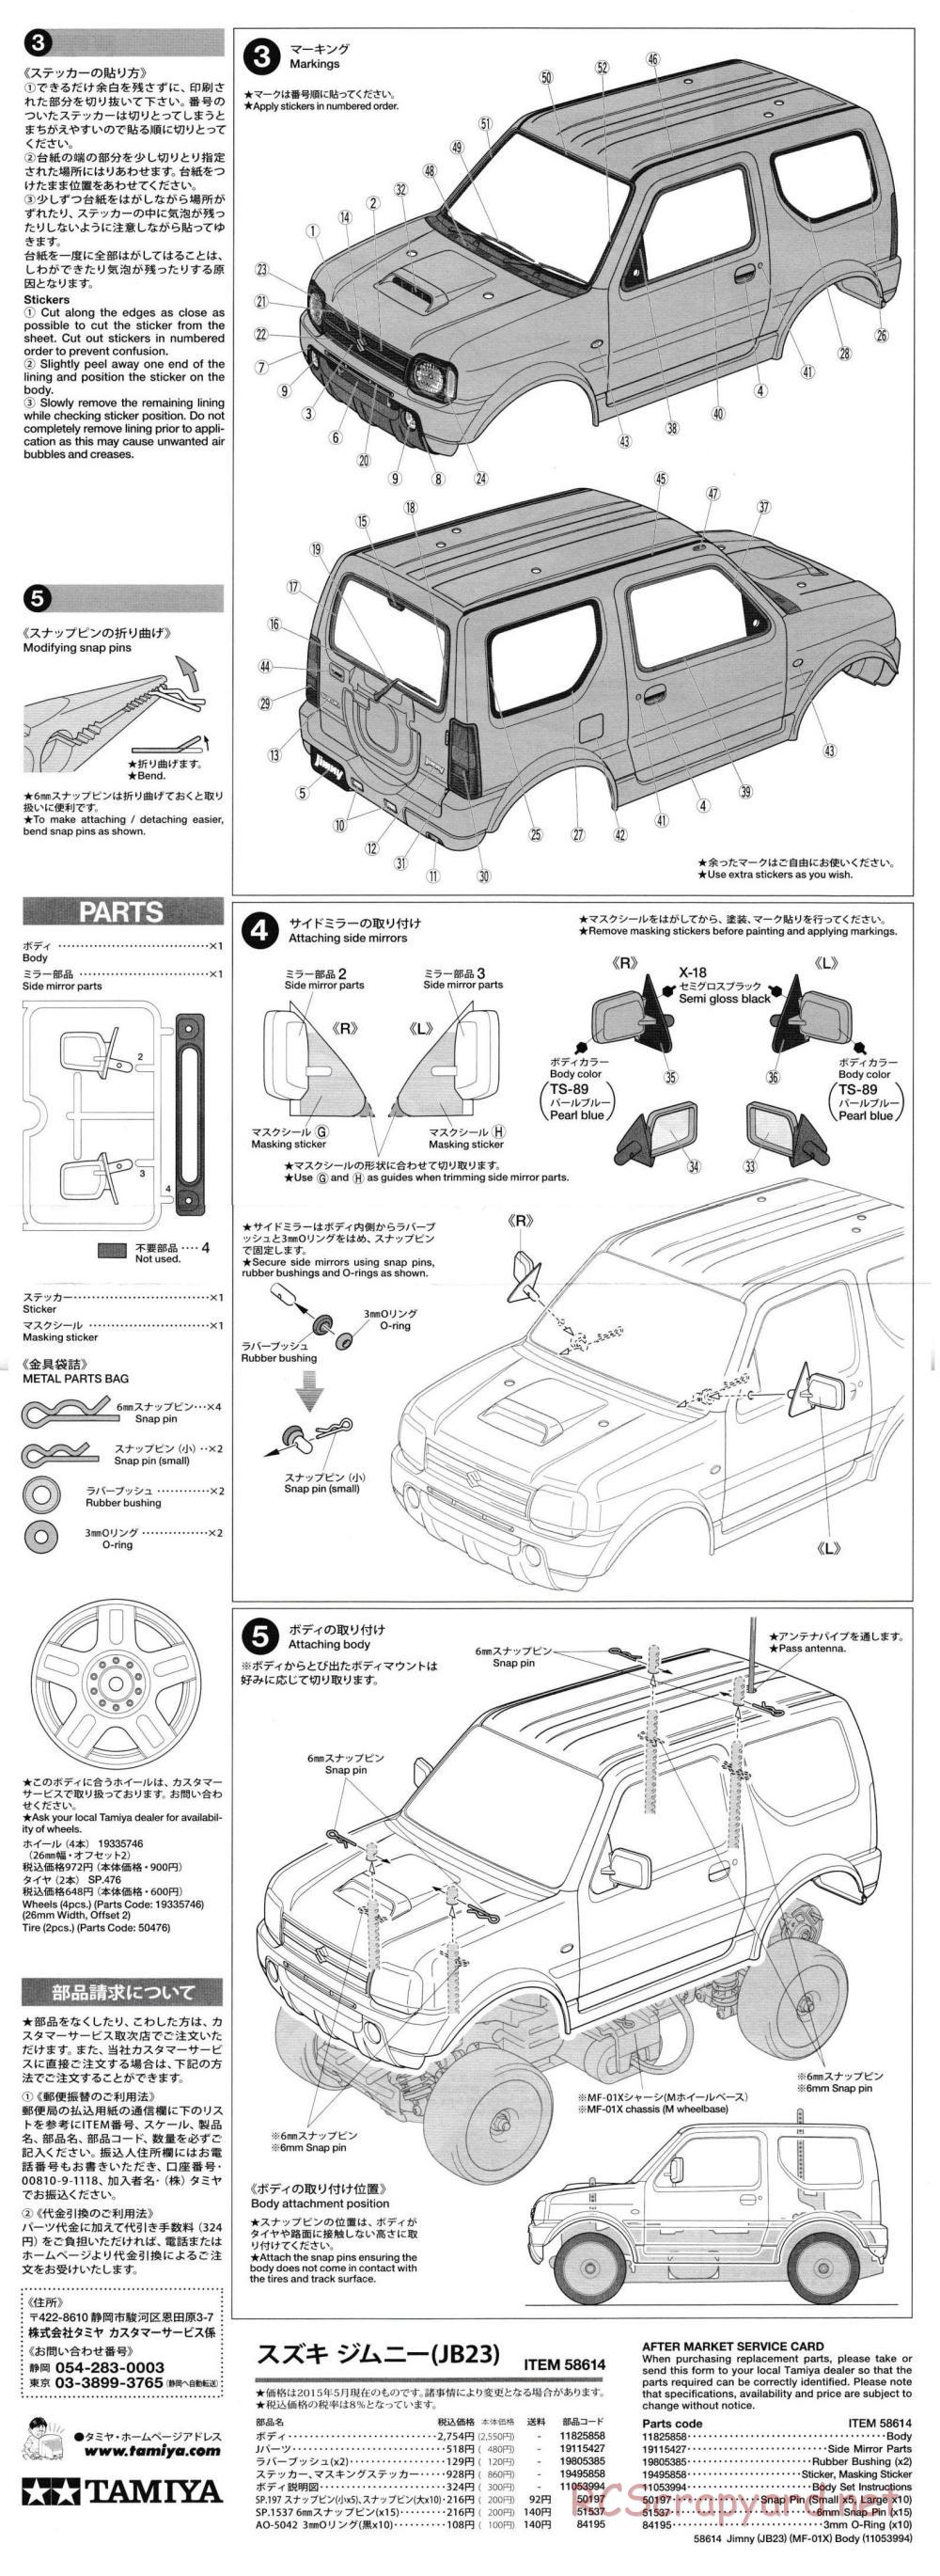 Tamiya - Suzuki Jimny JB23 - MF-01X Chassis - Body Manual - Page 2